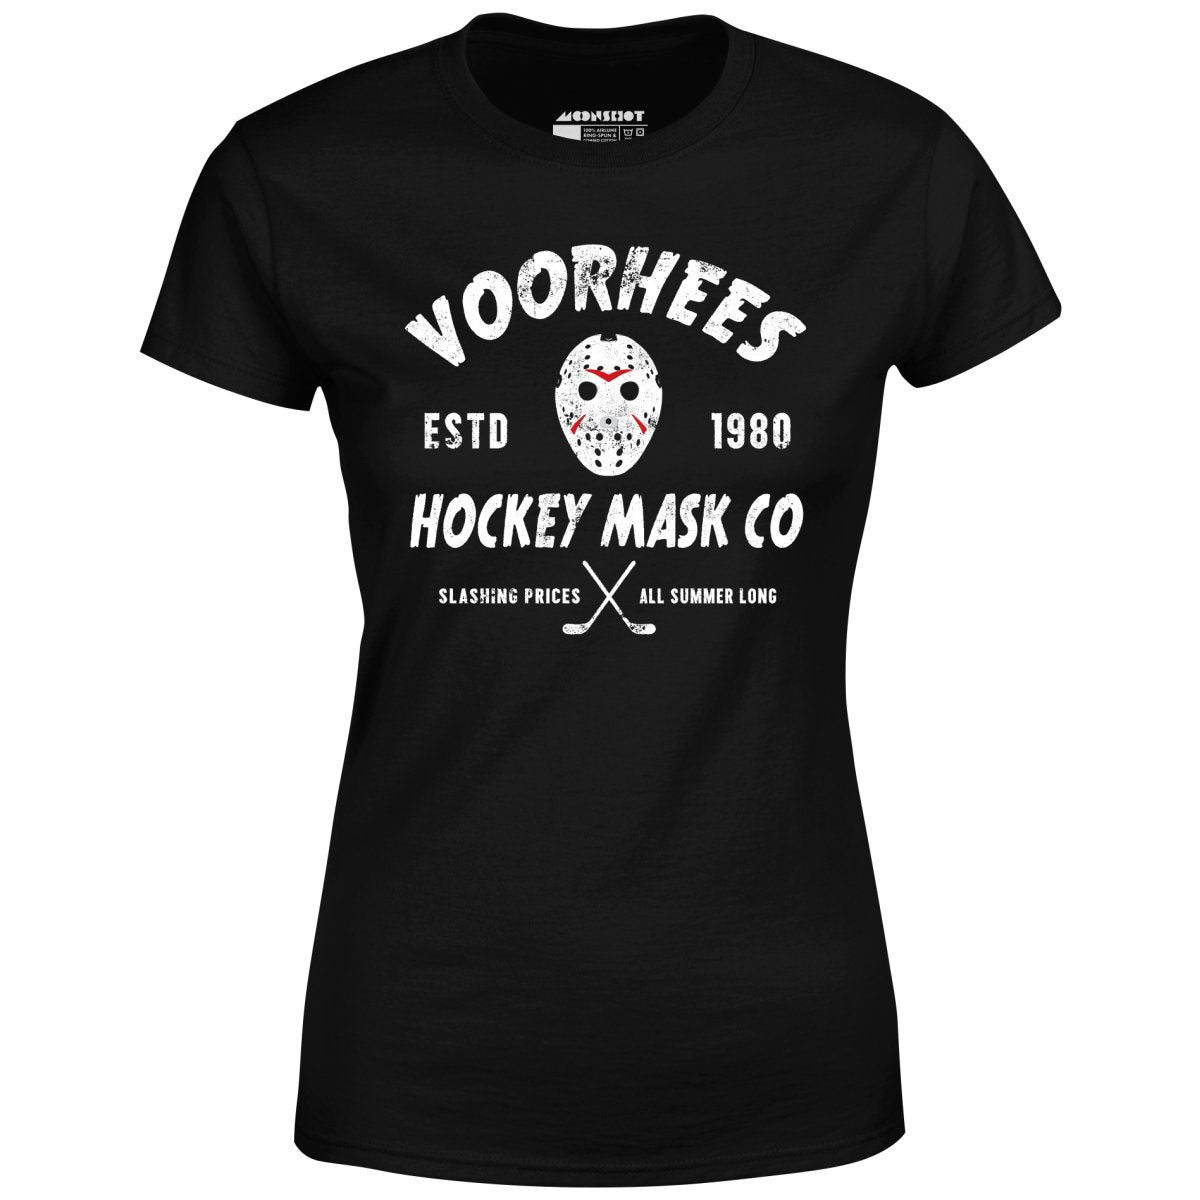 Voorhees Hockey Mask Co. - Women's T-Shirt